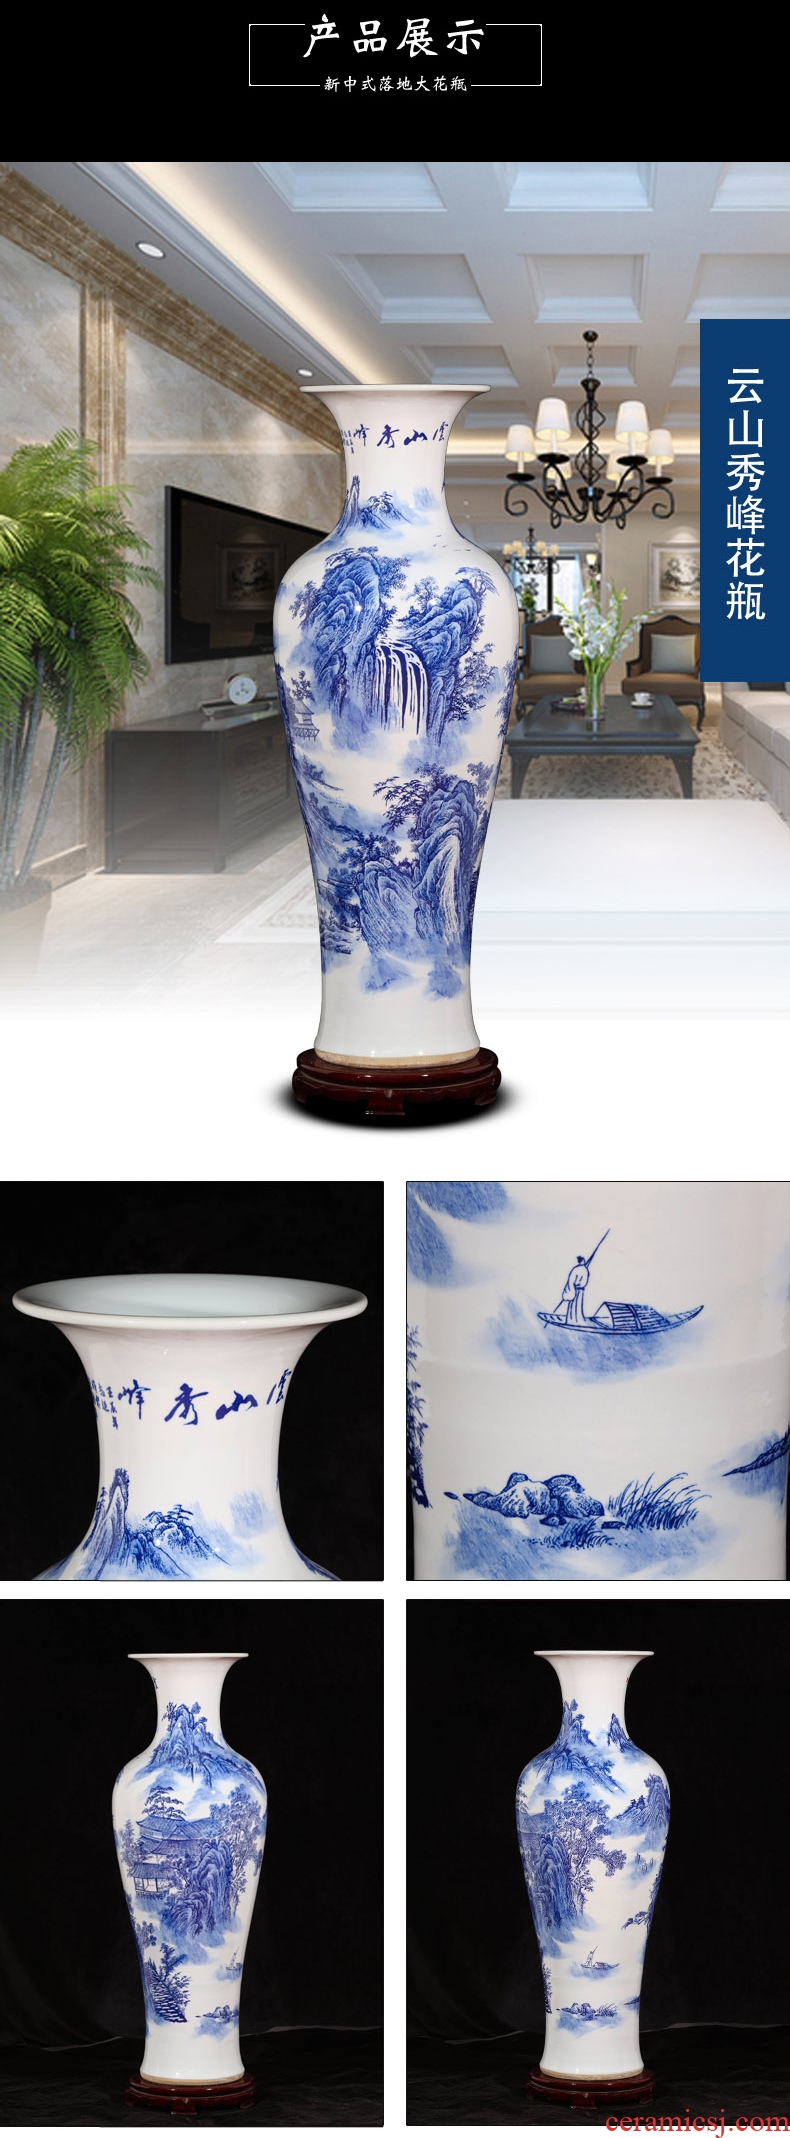 Ceramic light of large vase key-2 luxury furnishing articles dried flower arranging flowers home decoration blue glaze, the sitting room porch European - style decoration - 546402540640